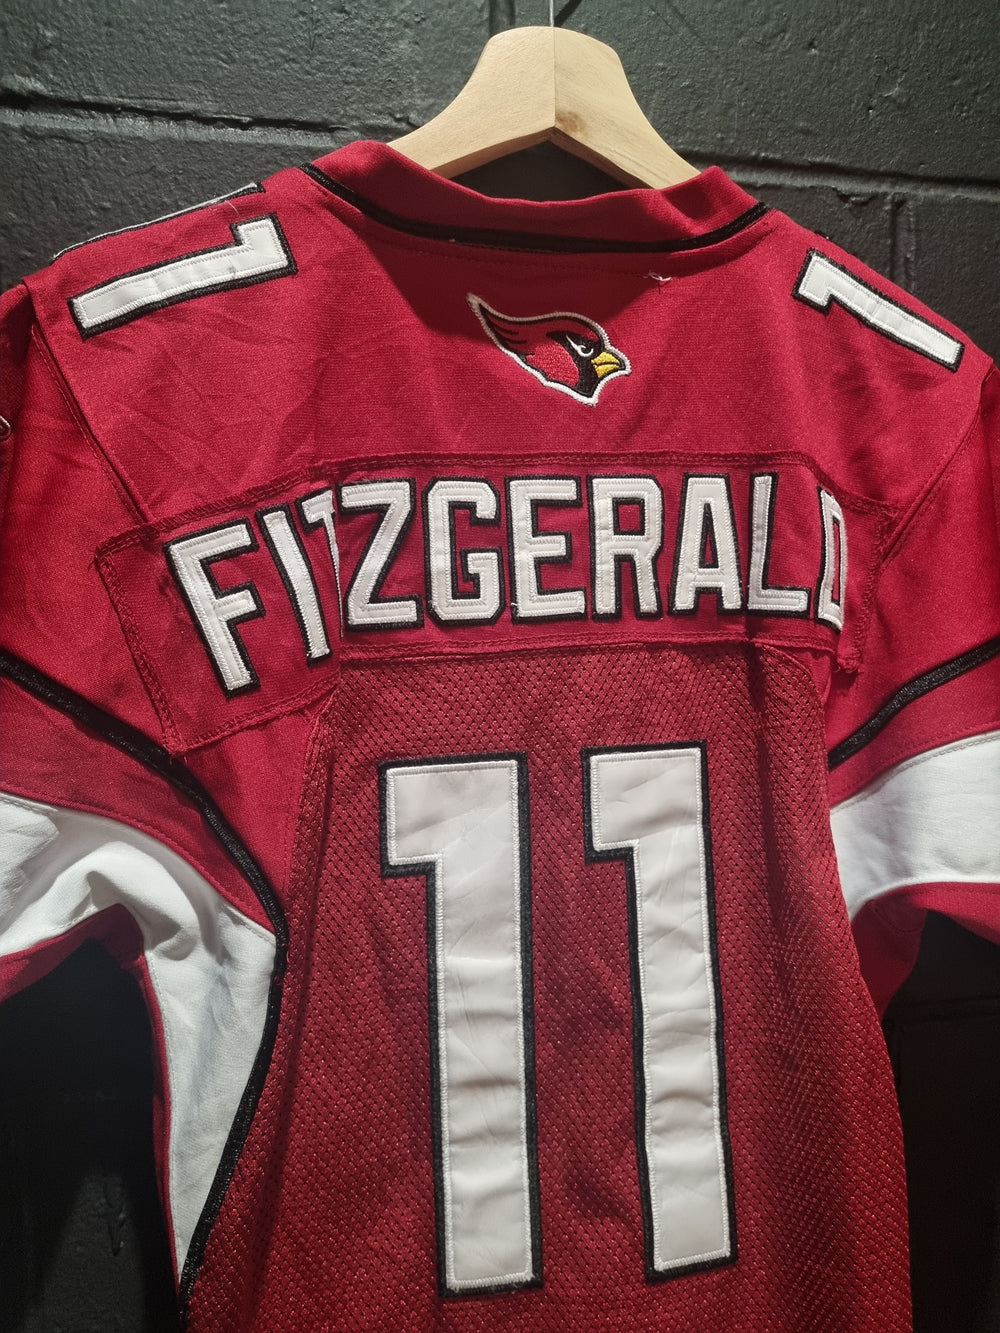 Cardinals Fitzgerald Reebok Youth Medium (10/12)